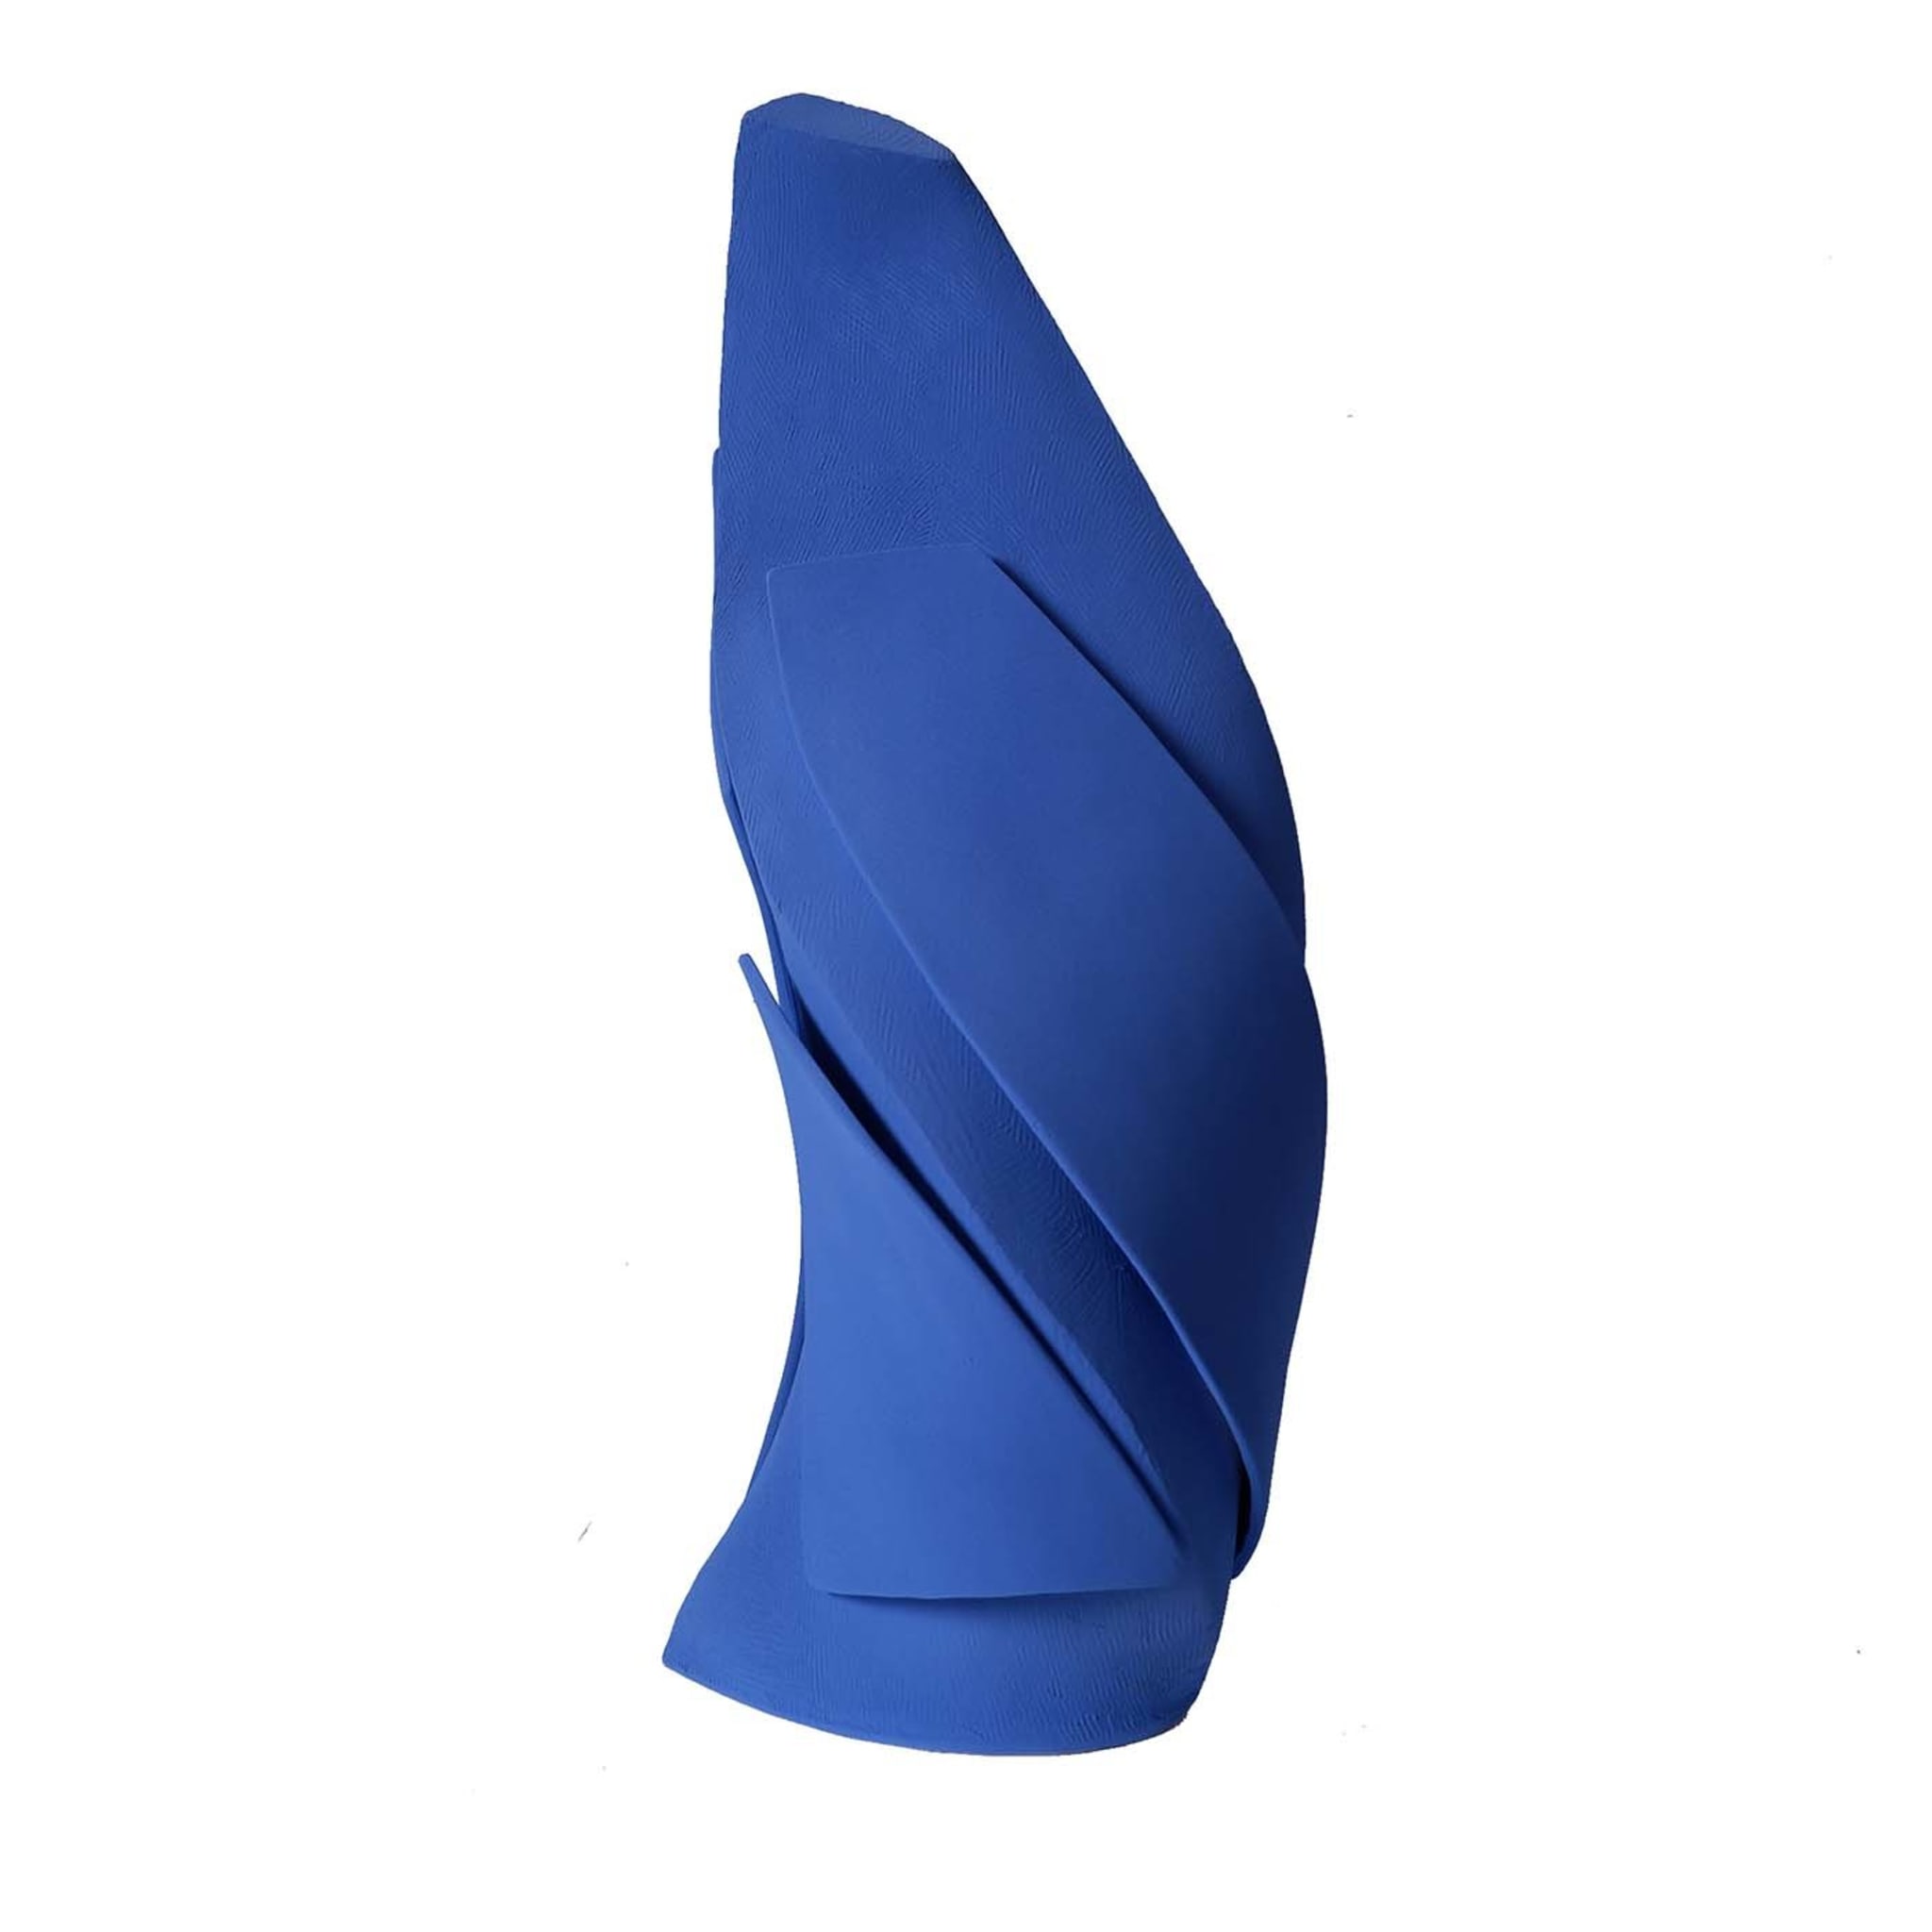 Blue Demeter Vase #1 - Main view